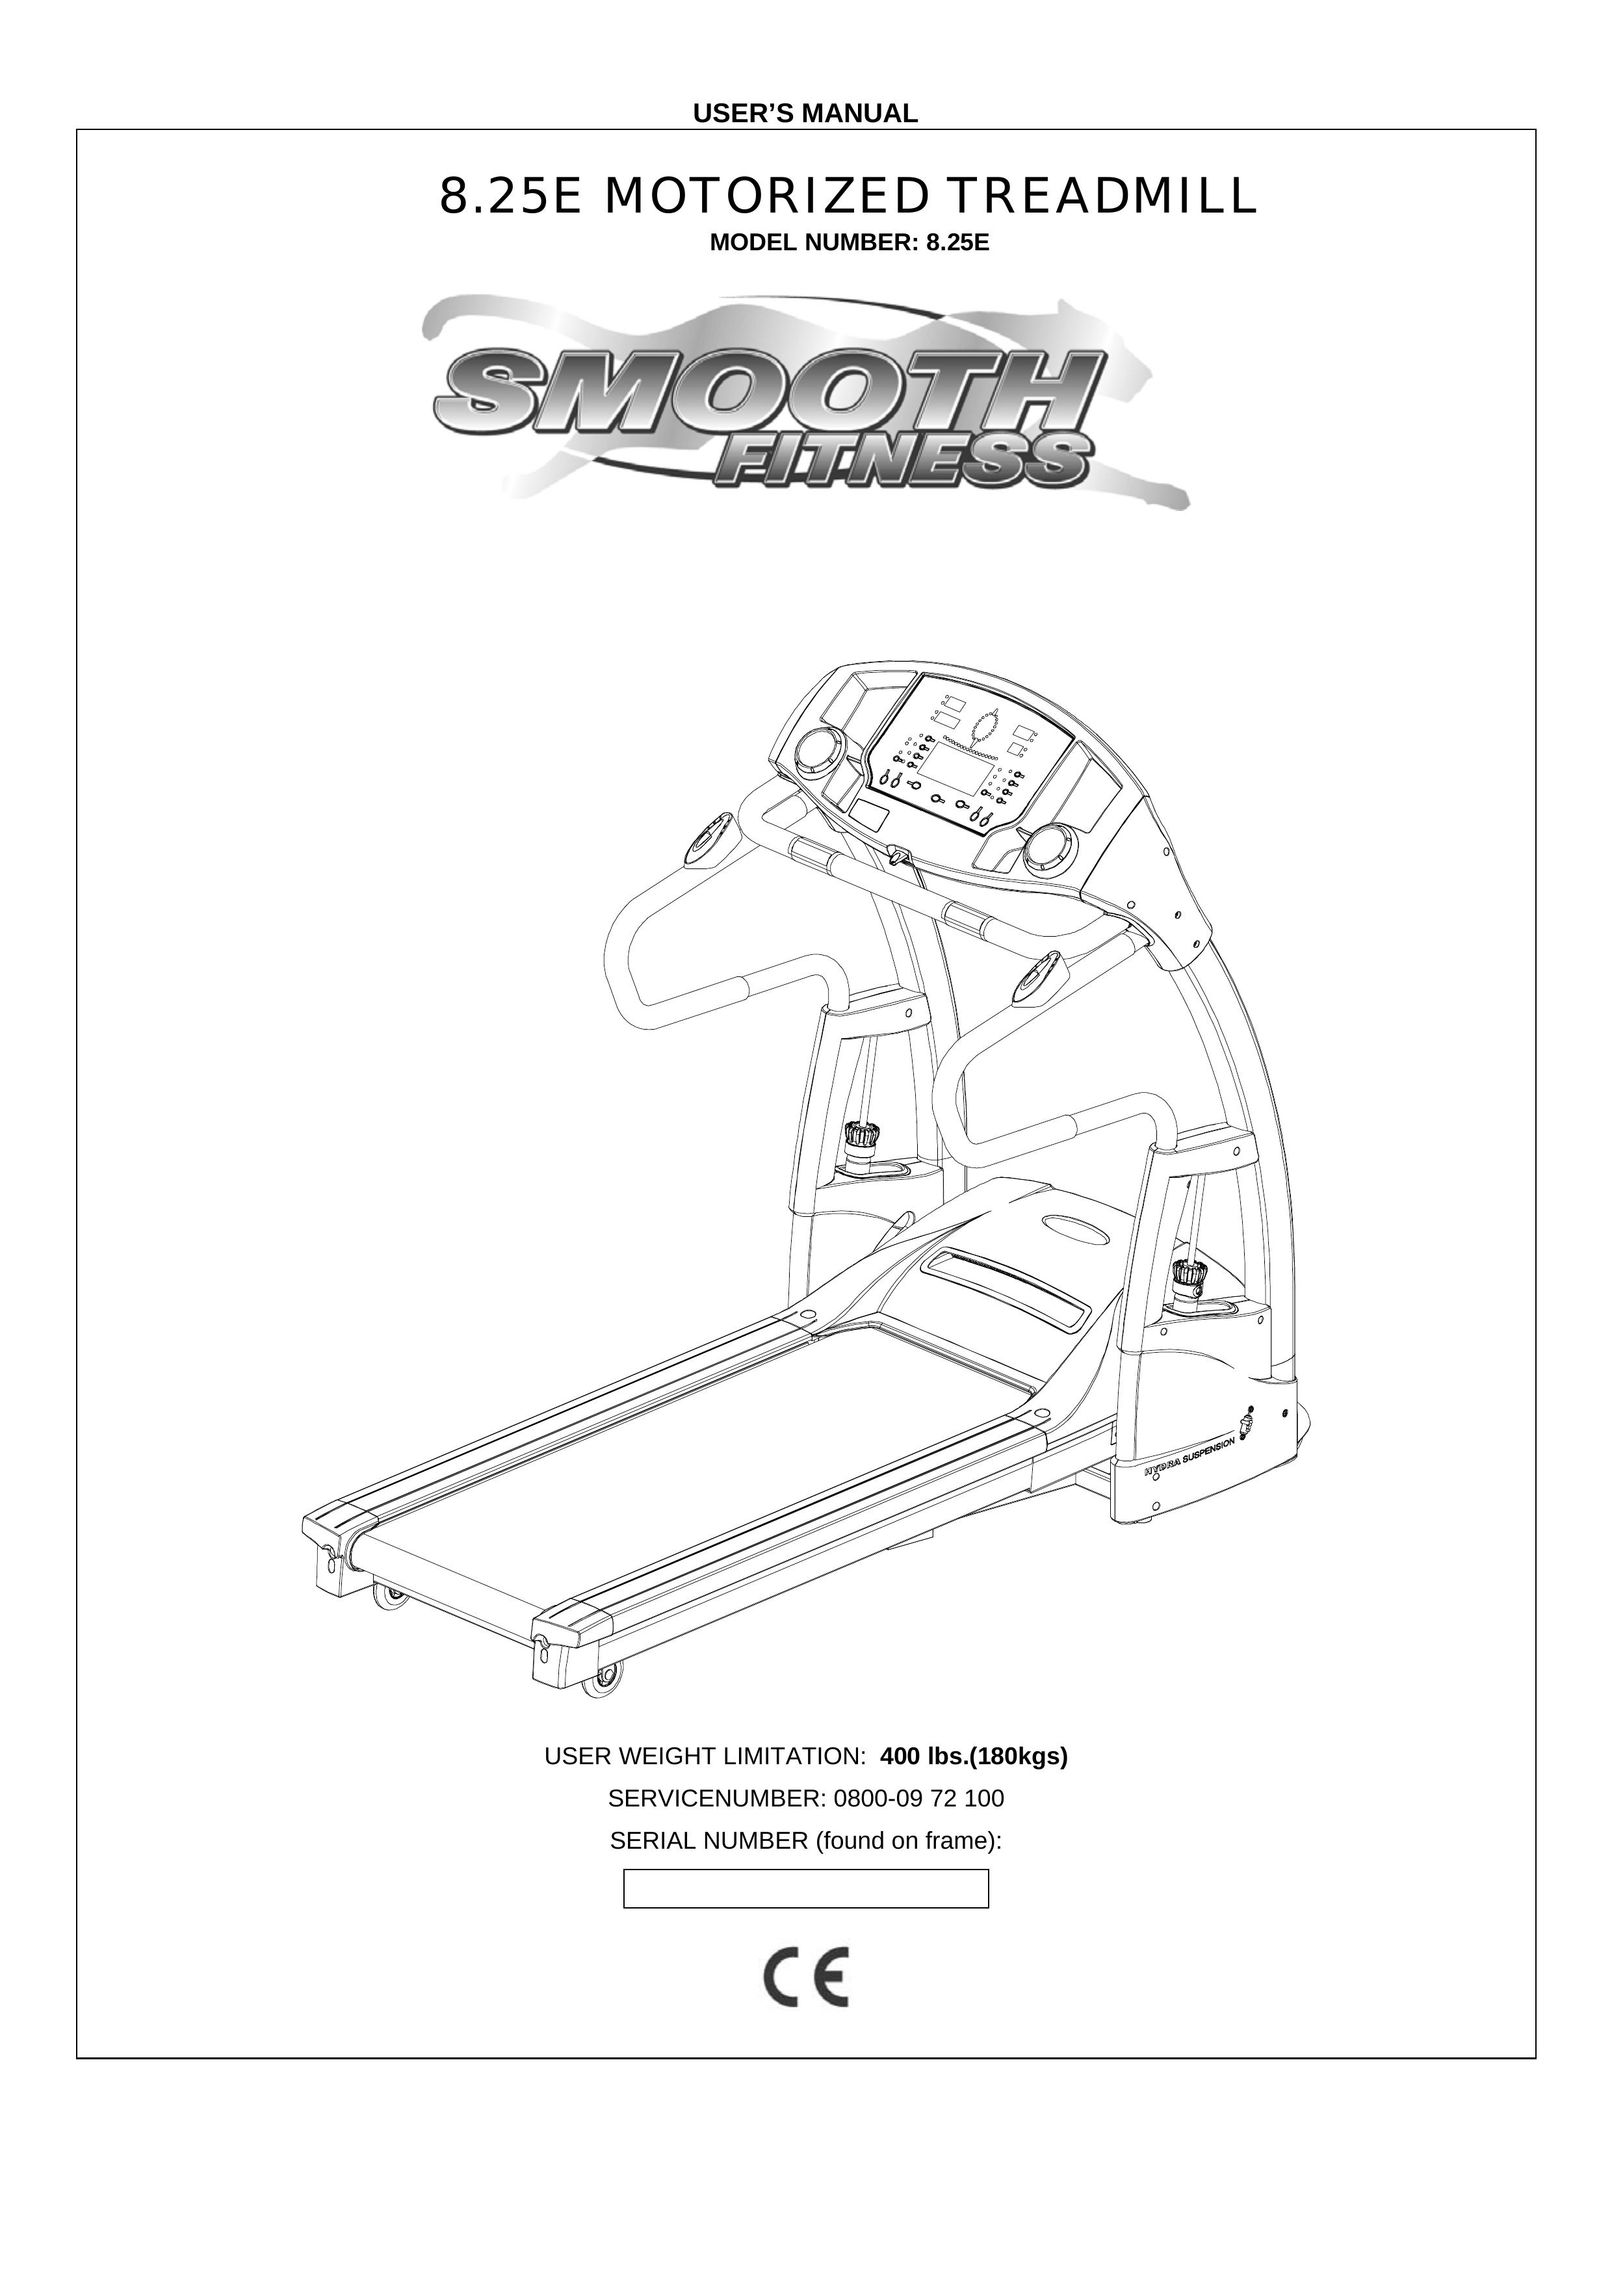 Smooth Fitness 8.25E Treadmill User Manual